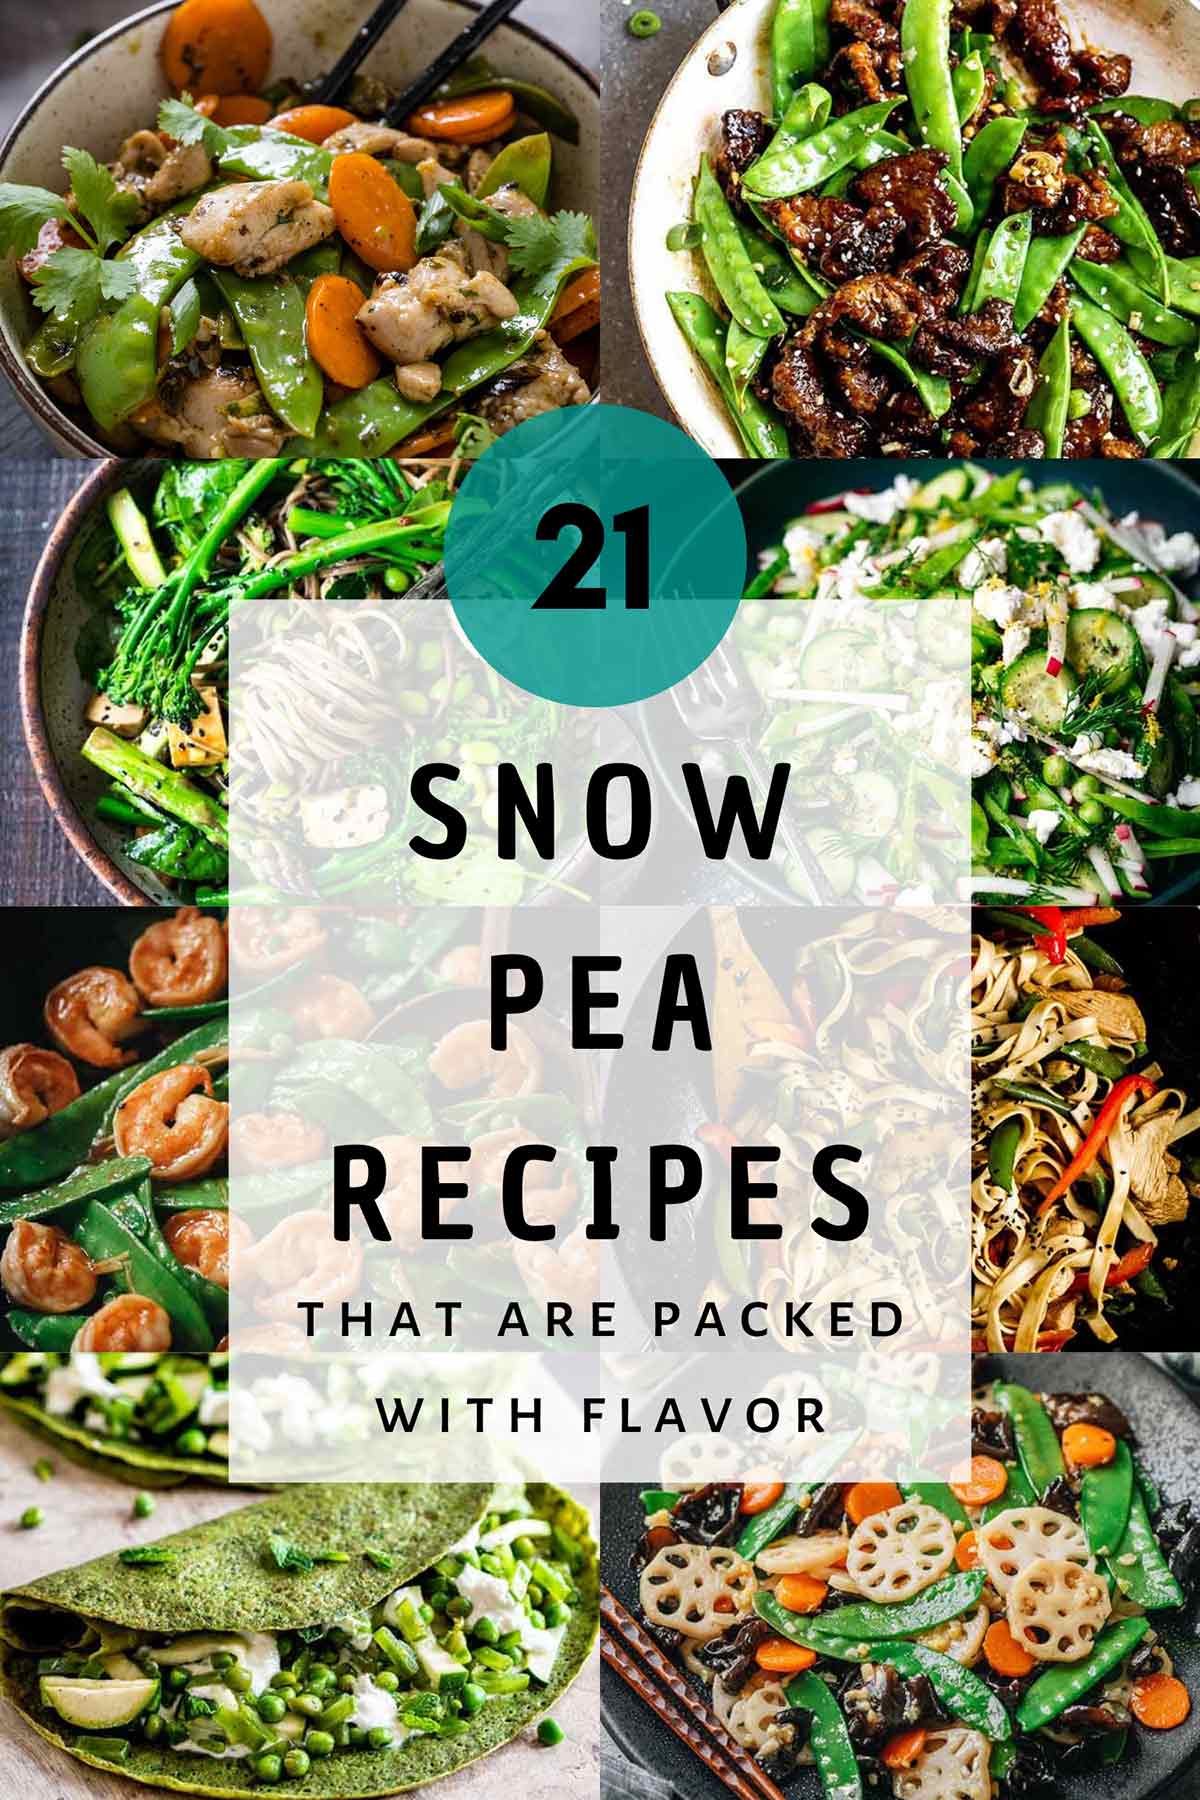 Snow Pea recipes featured image